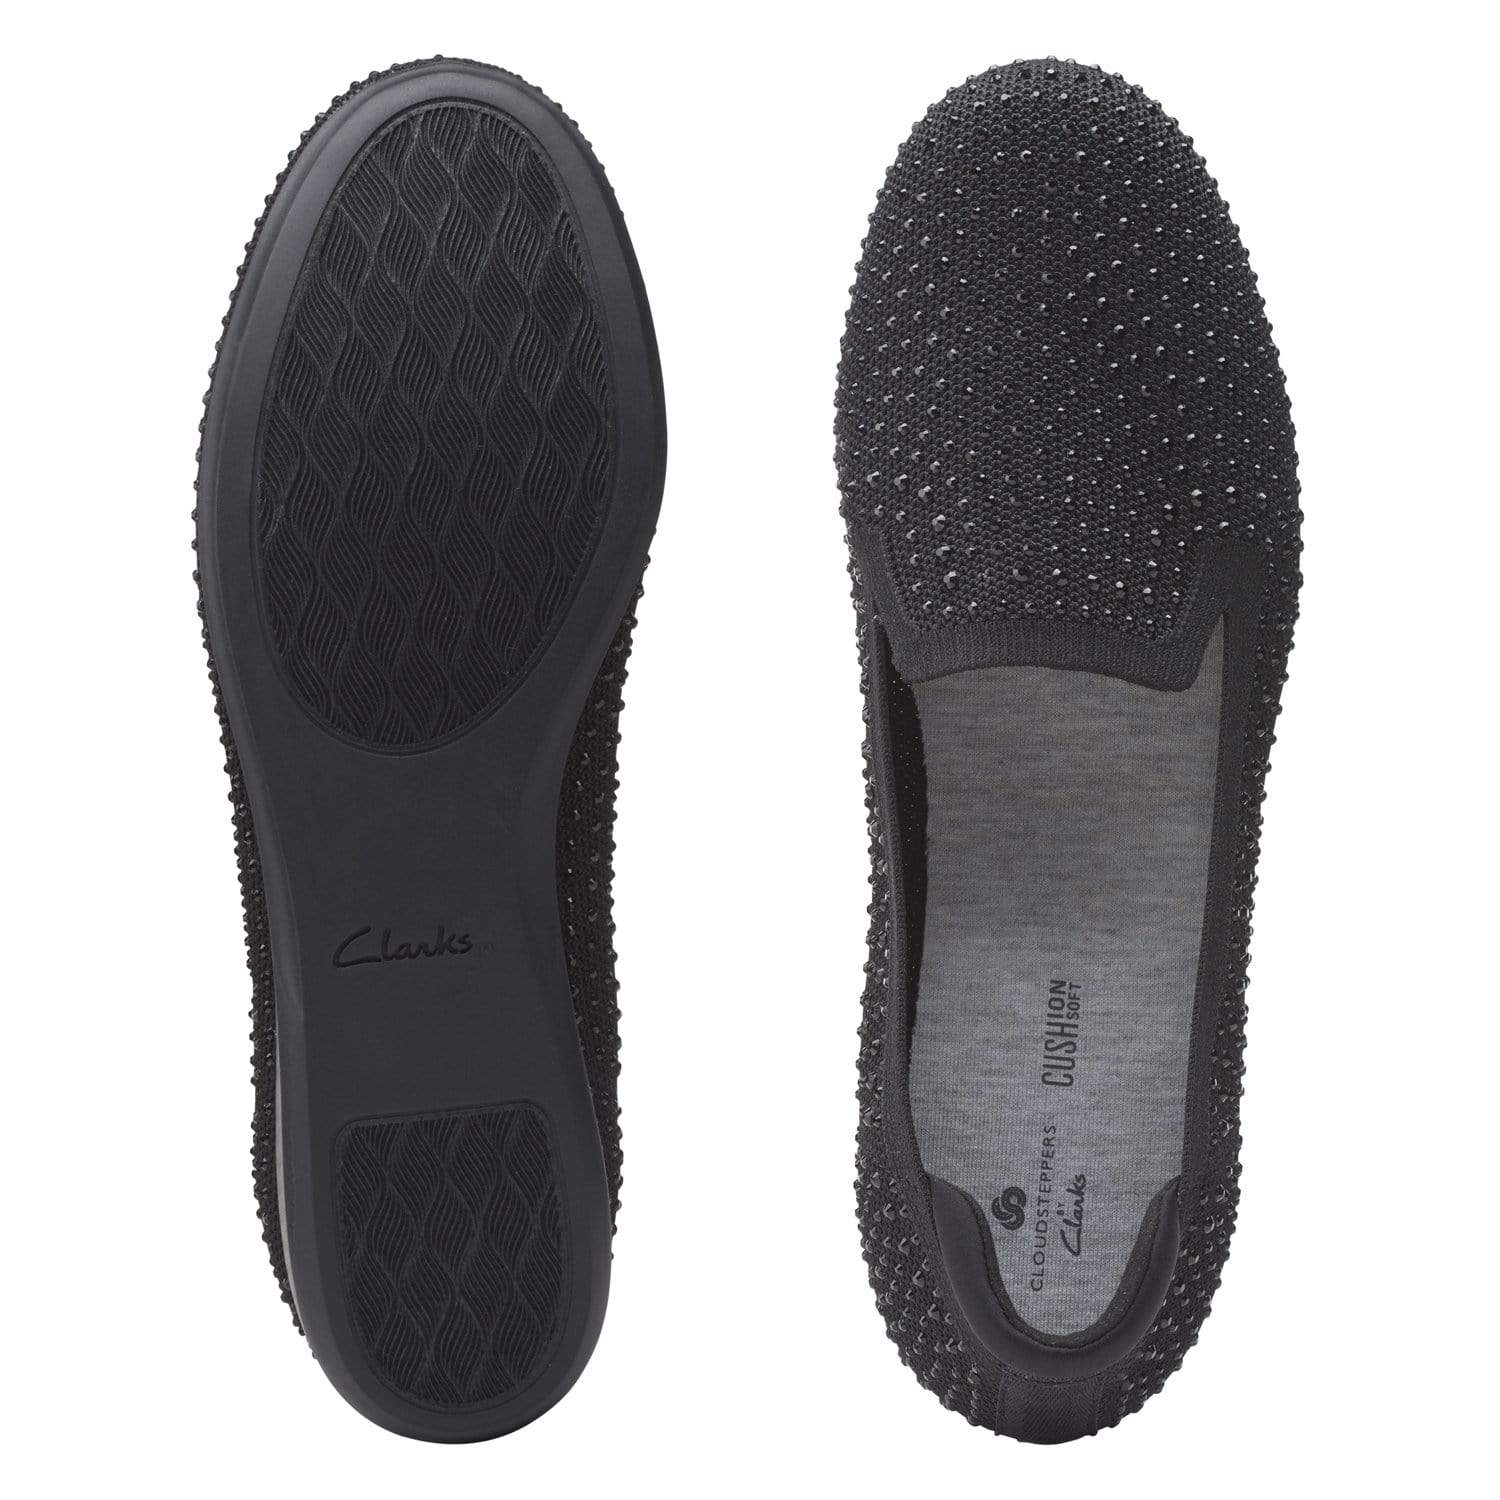 Clarks Carly Dream - Shoes - Black Textile - 261569154 - D Width (Standard Fit)